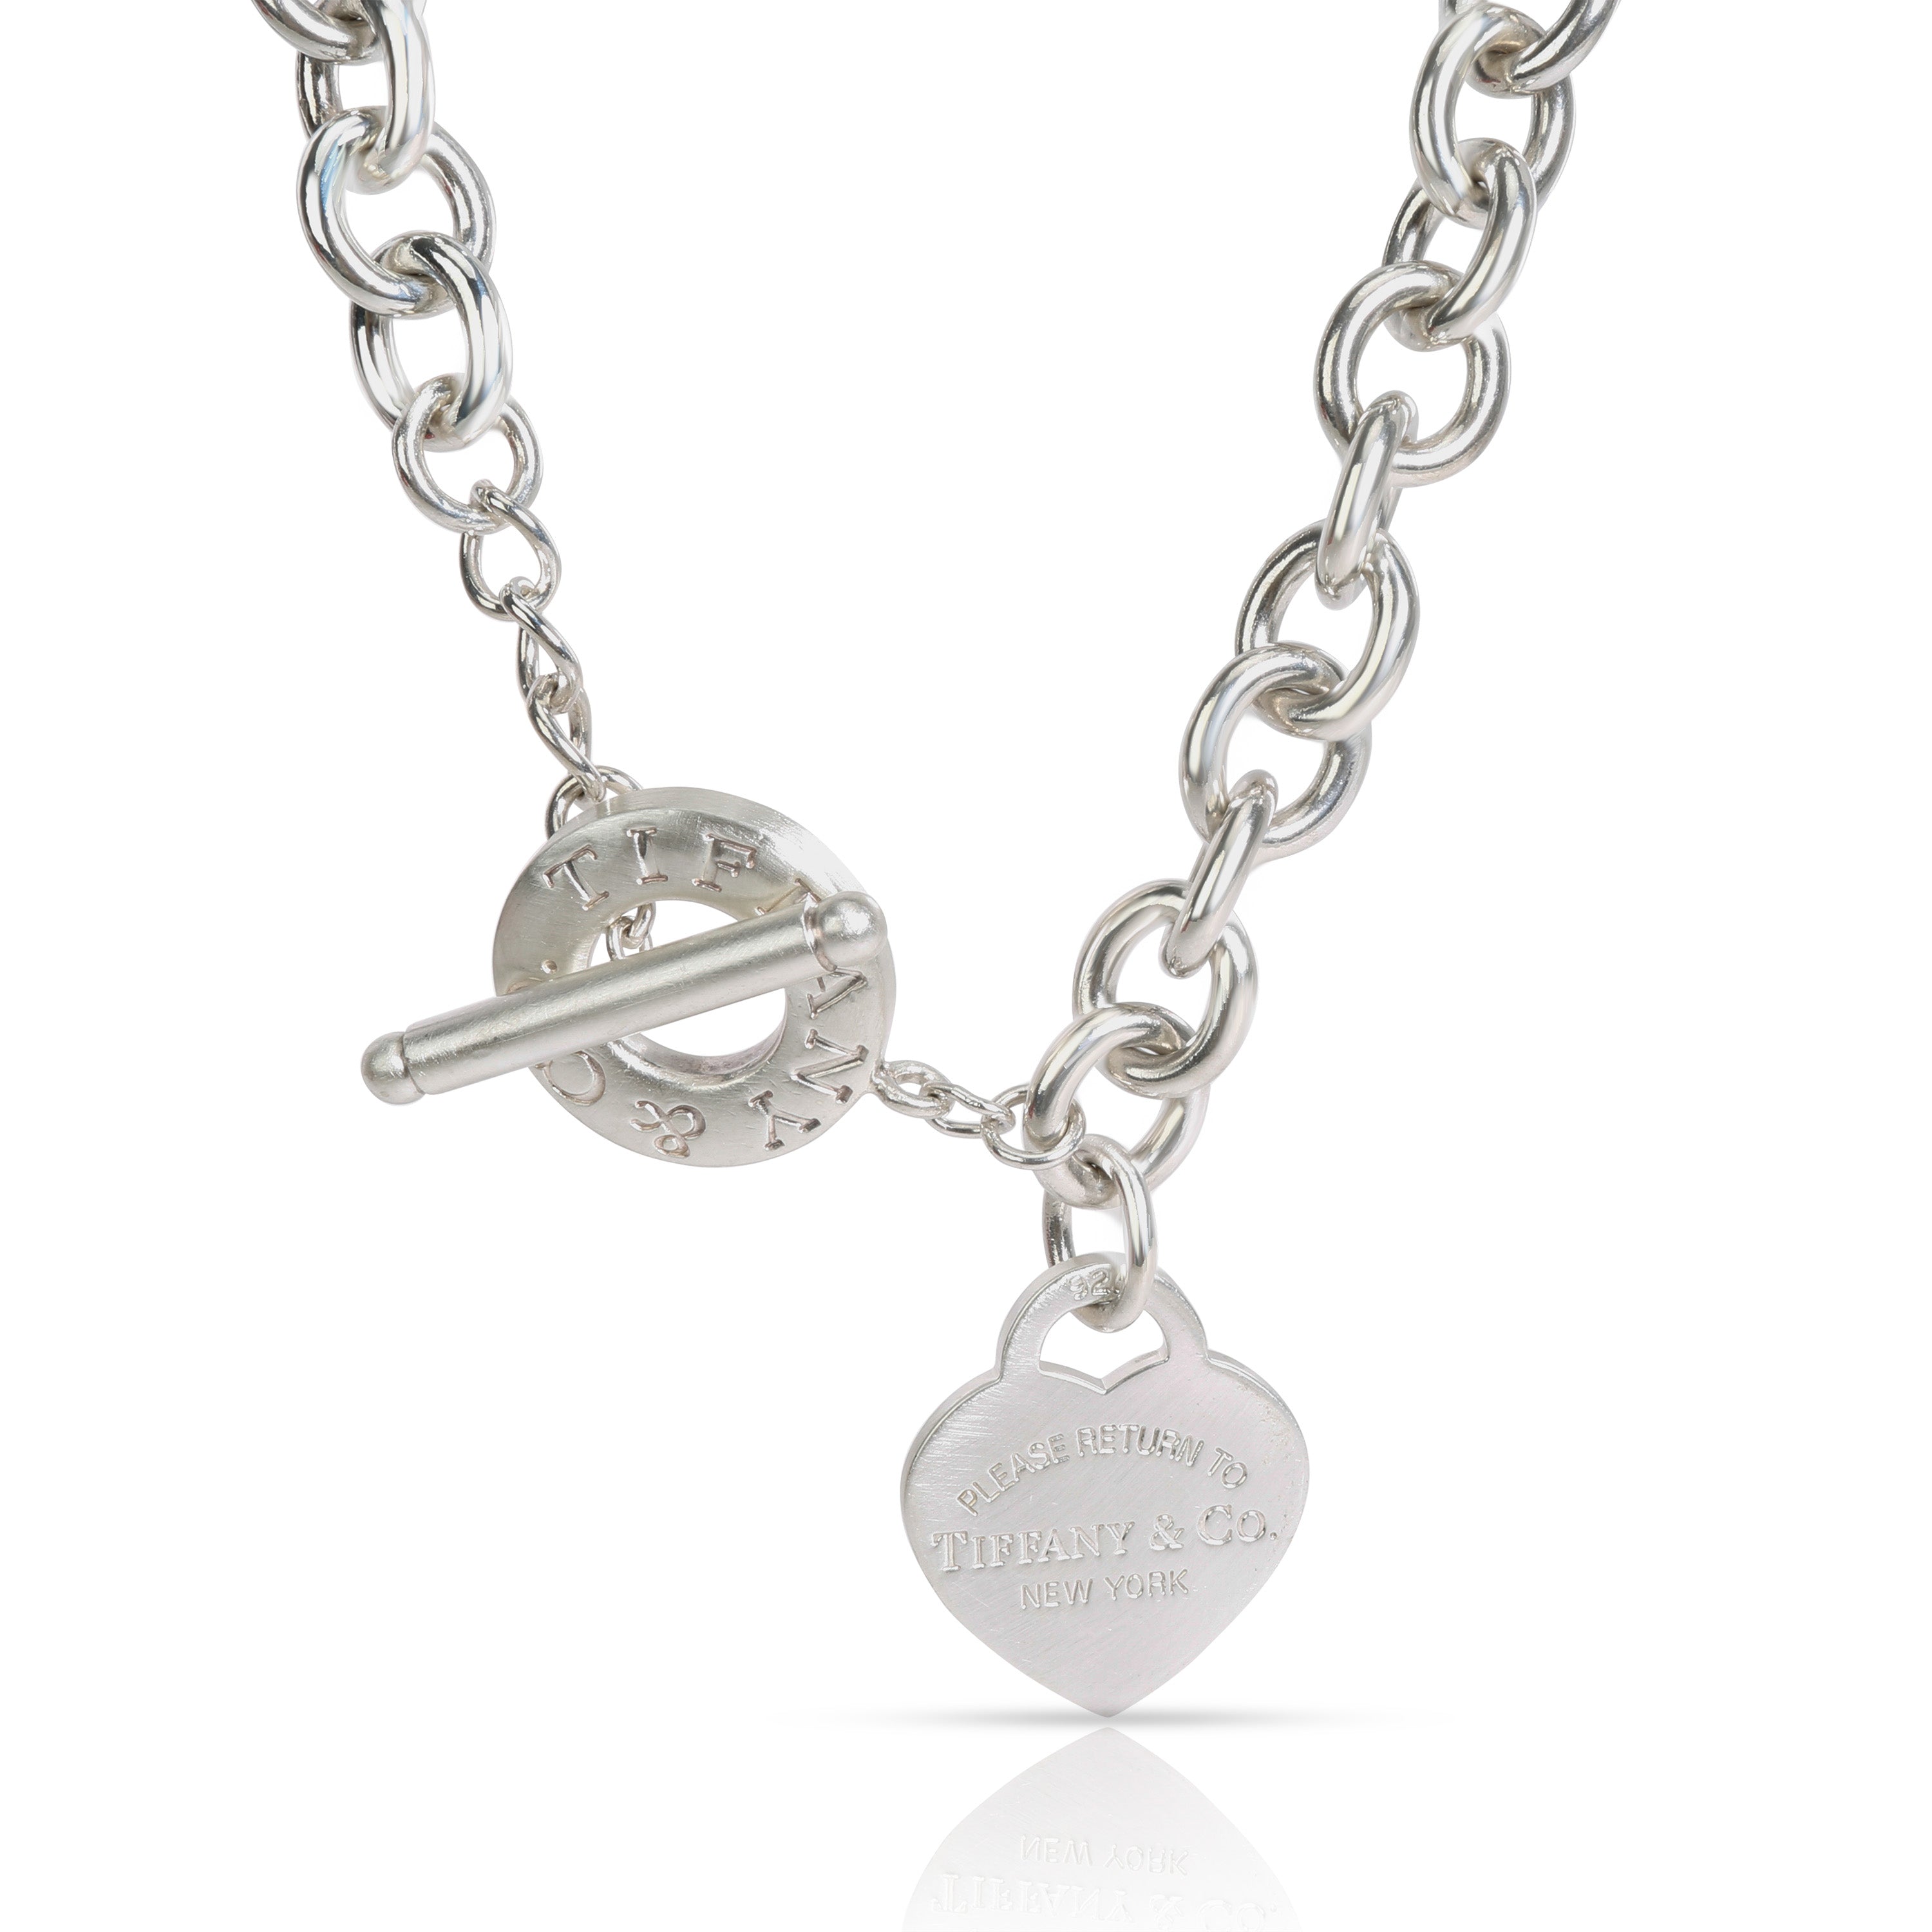 Tiffany & Co. 1837 Lock Necklace in Sterling Silver, myGemma